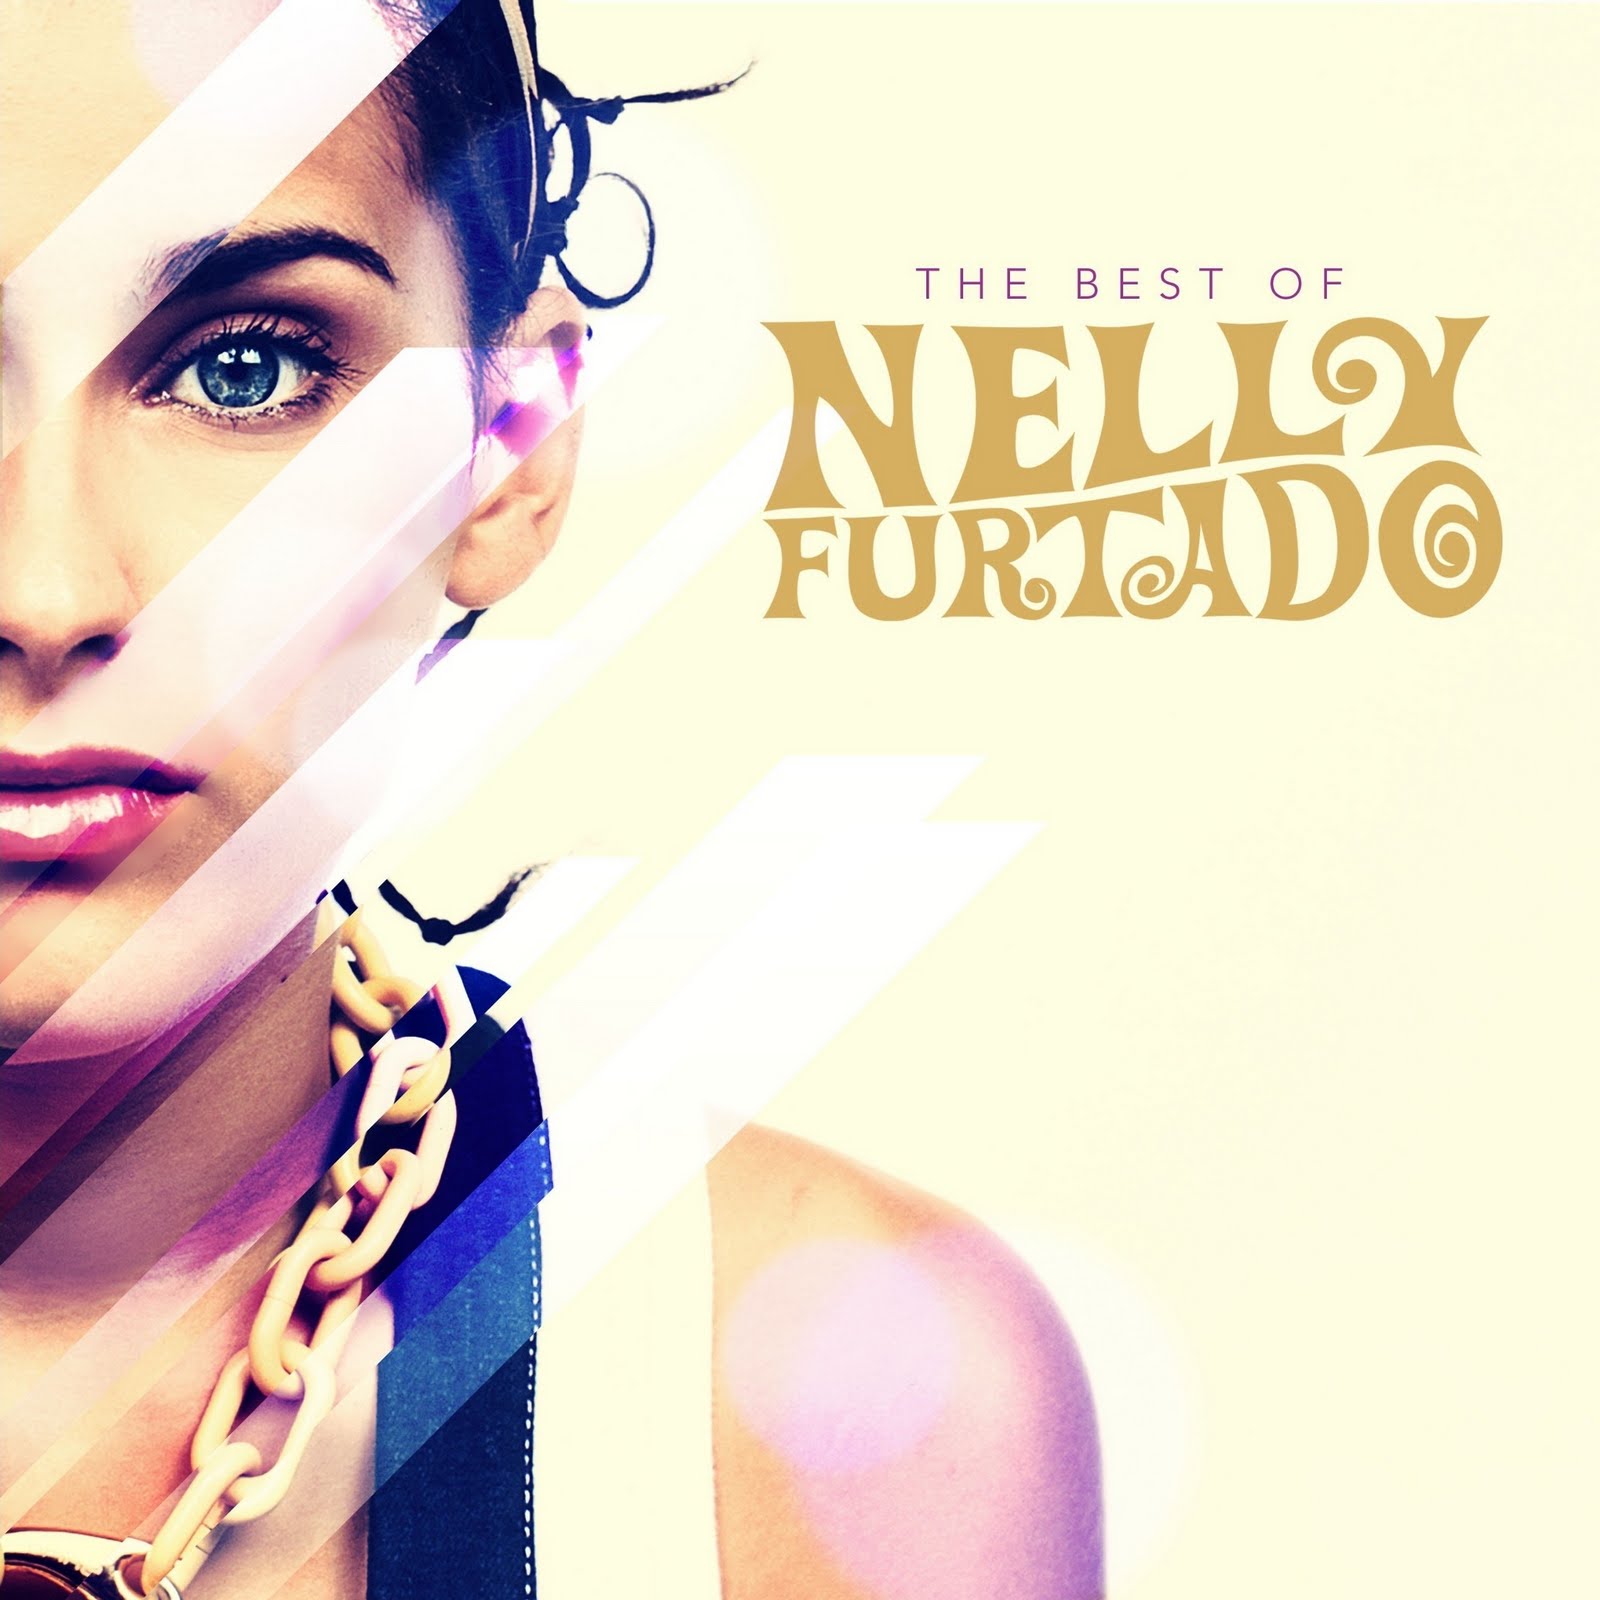 http://4.bp.blogspot.com/_bq9TcMaVMGw/TRjgfYYz9AI/AAAAAAAAE-I/HxNhjBkrbaE/s1600/The+best+of+Nelly+Furtado.jpg